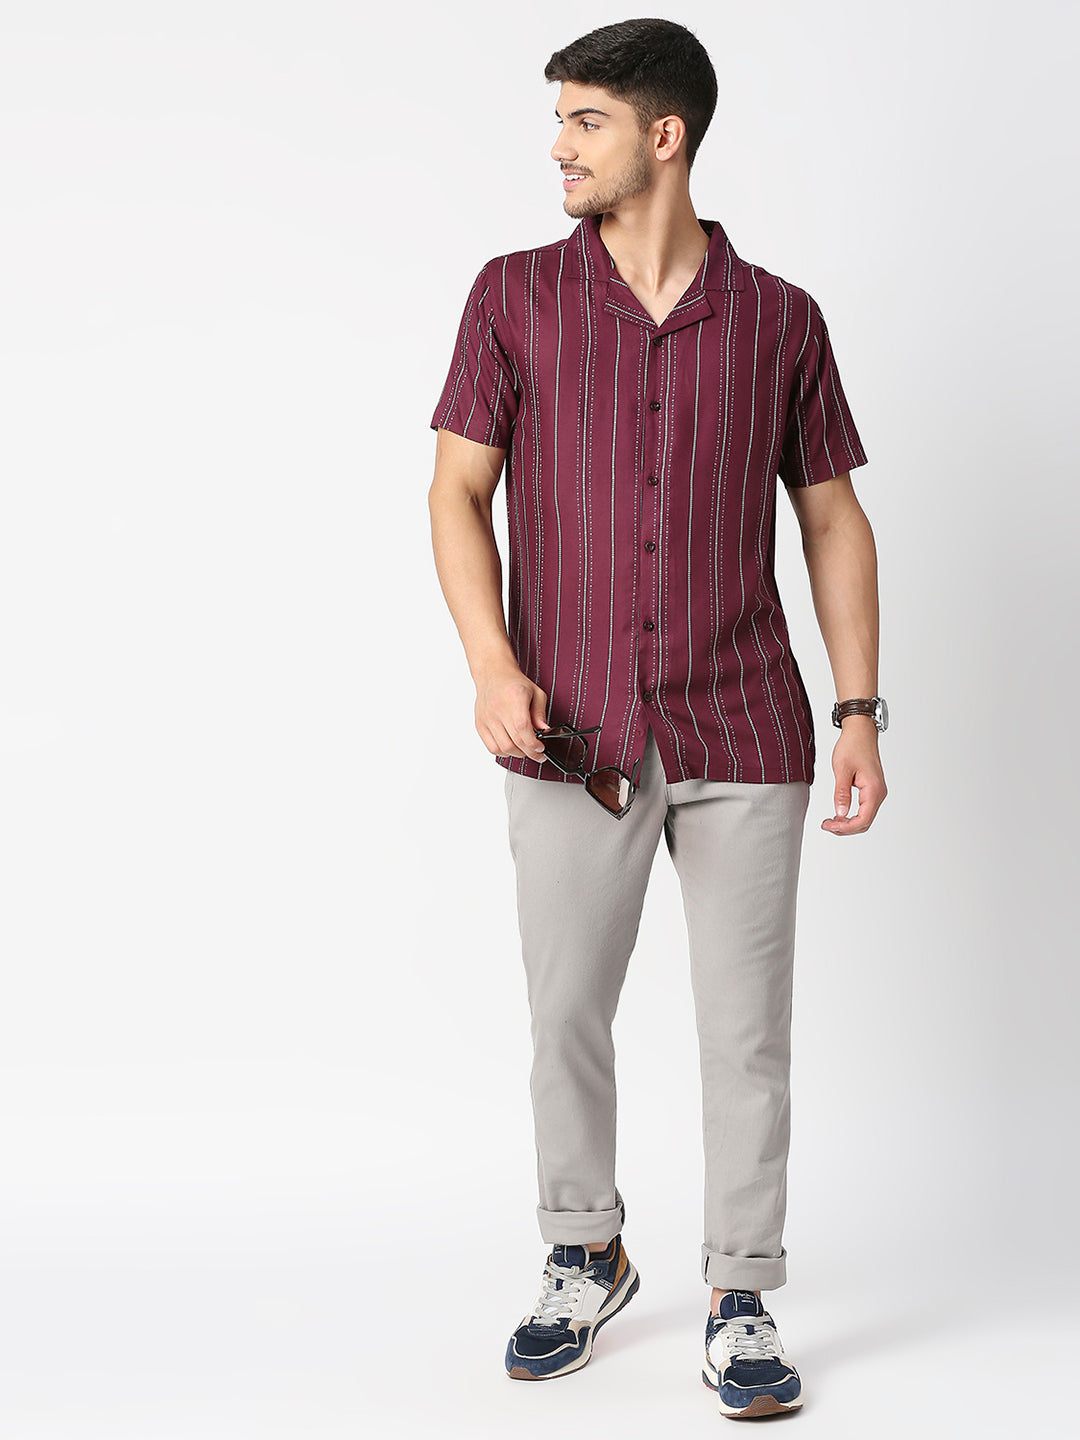 Morocco Aubergine Purple Vertical Stripes Shirt